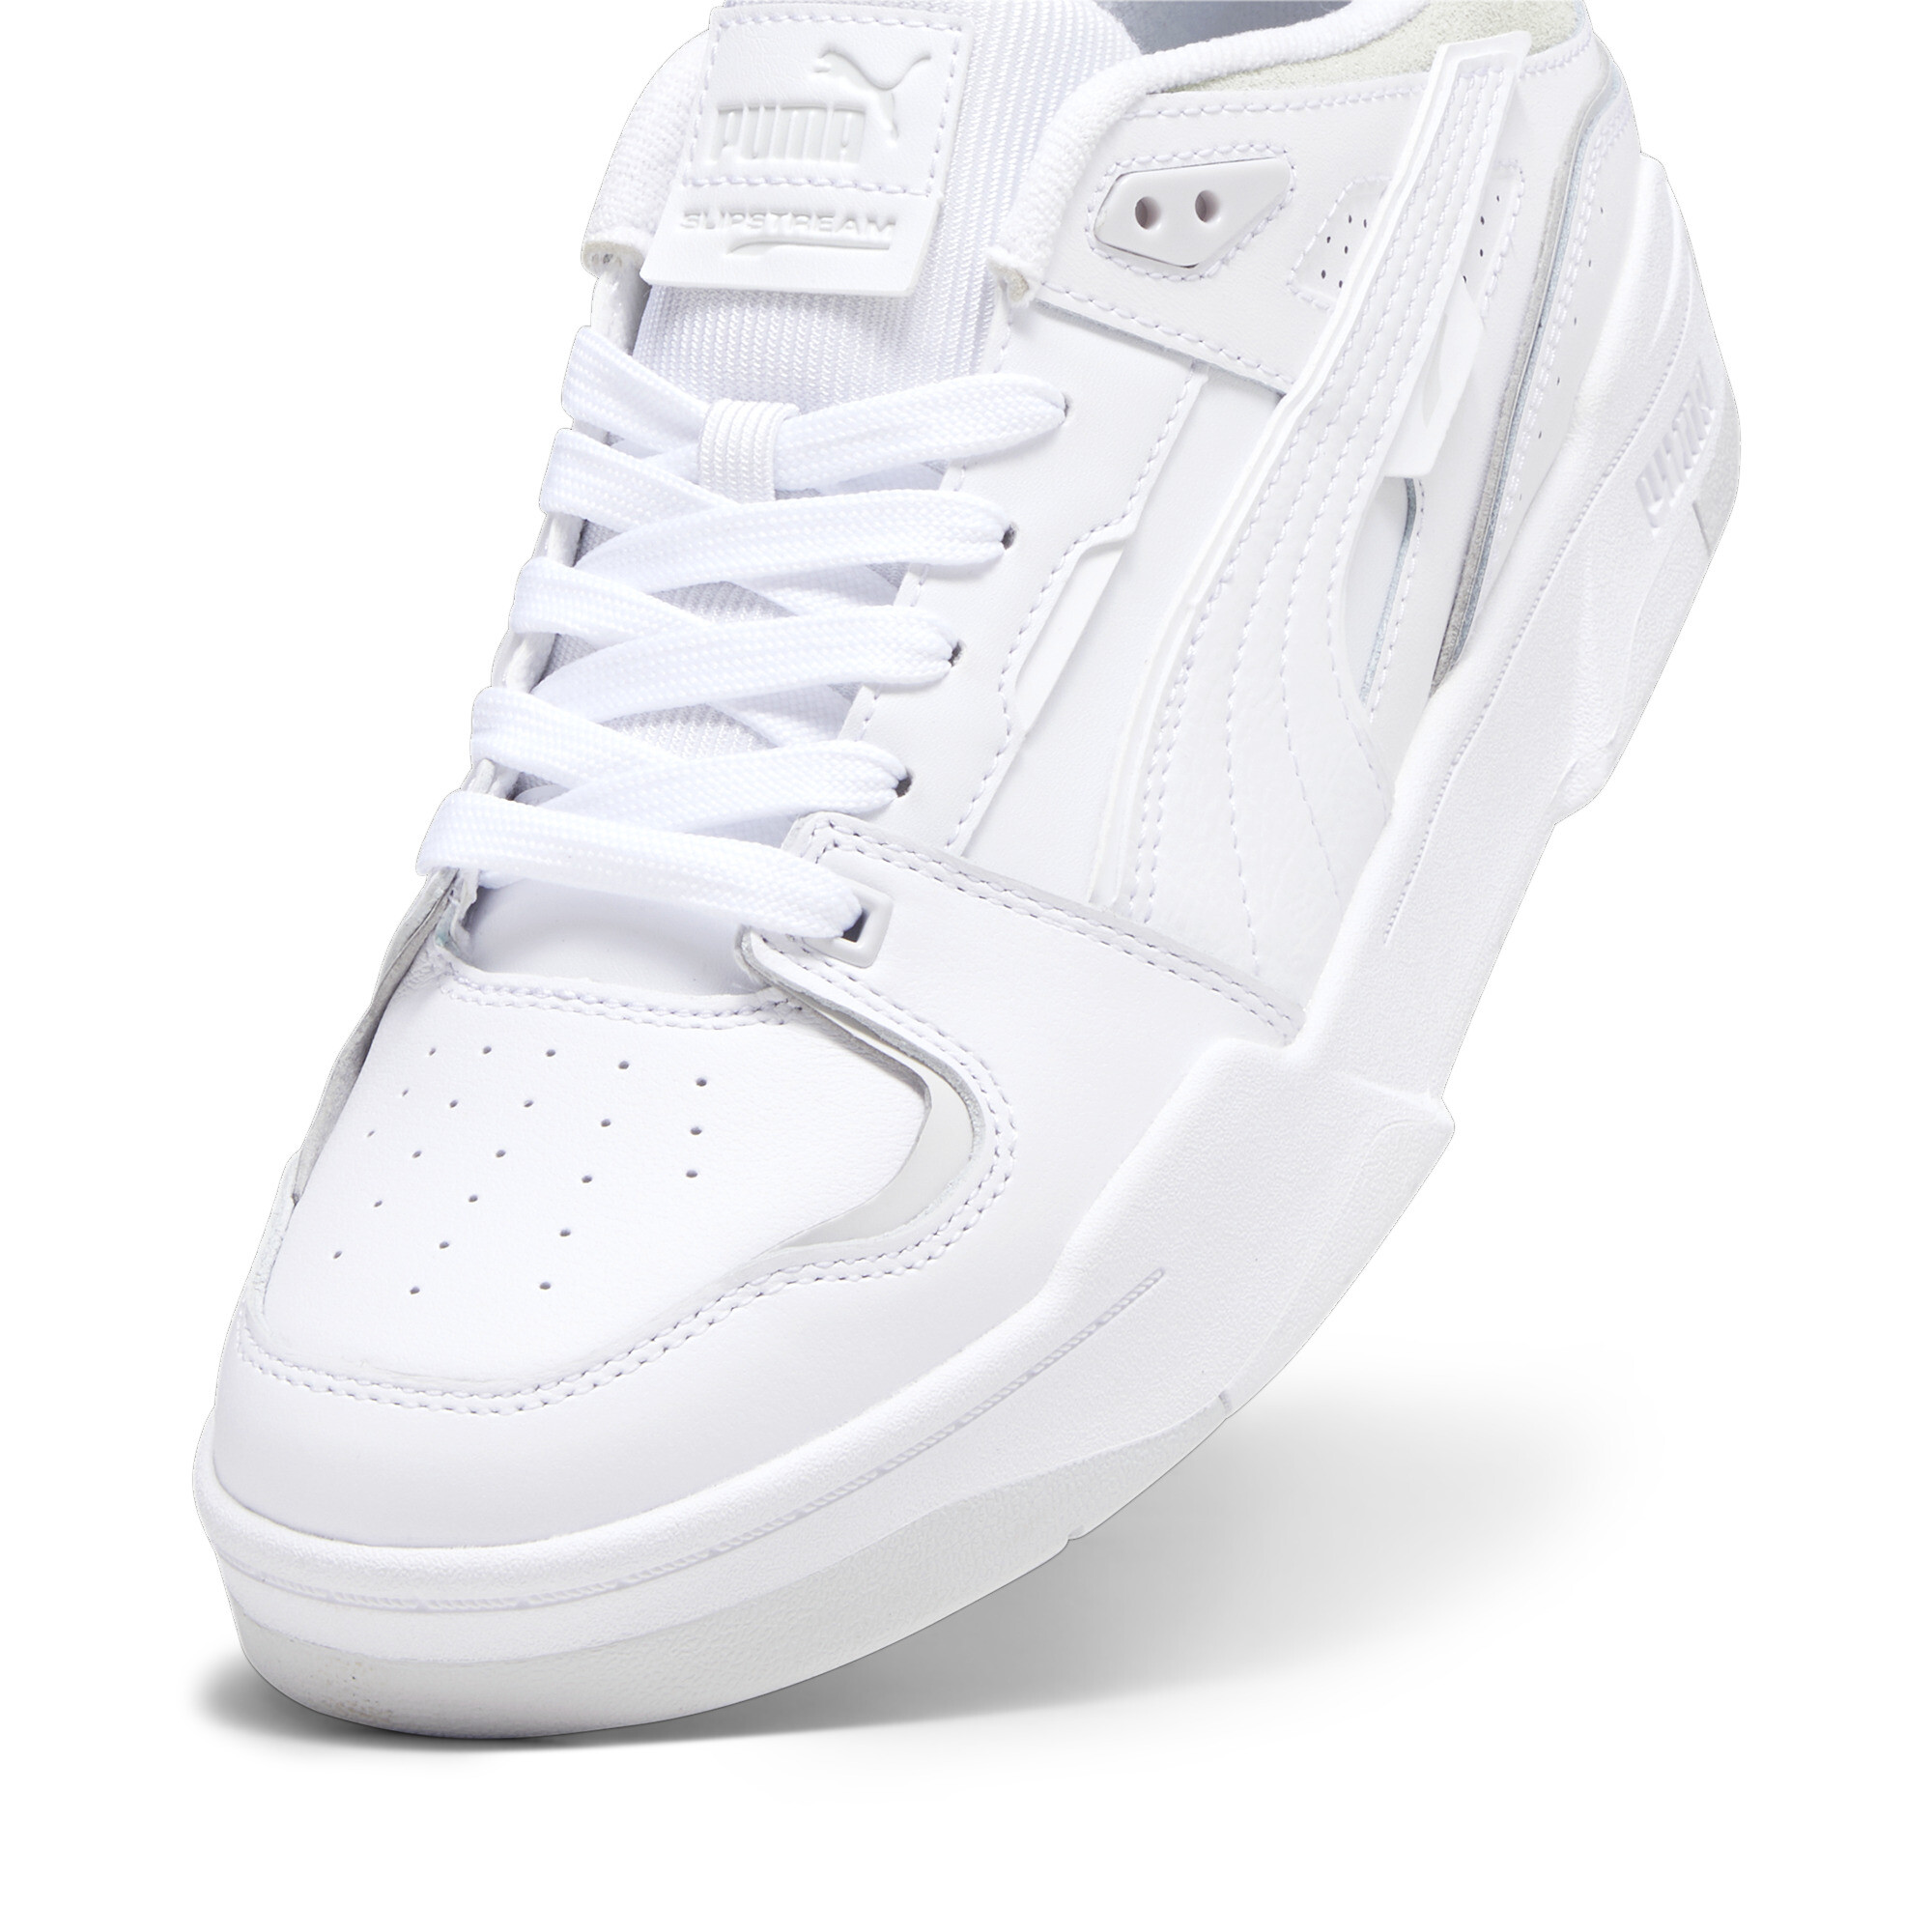 Men's PUMA Slipstream Bball Sneakers In White, Size EU 37.5